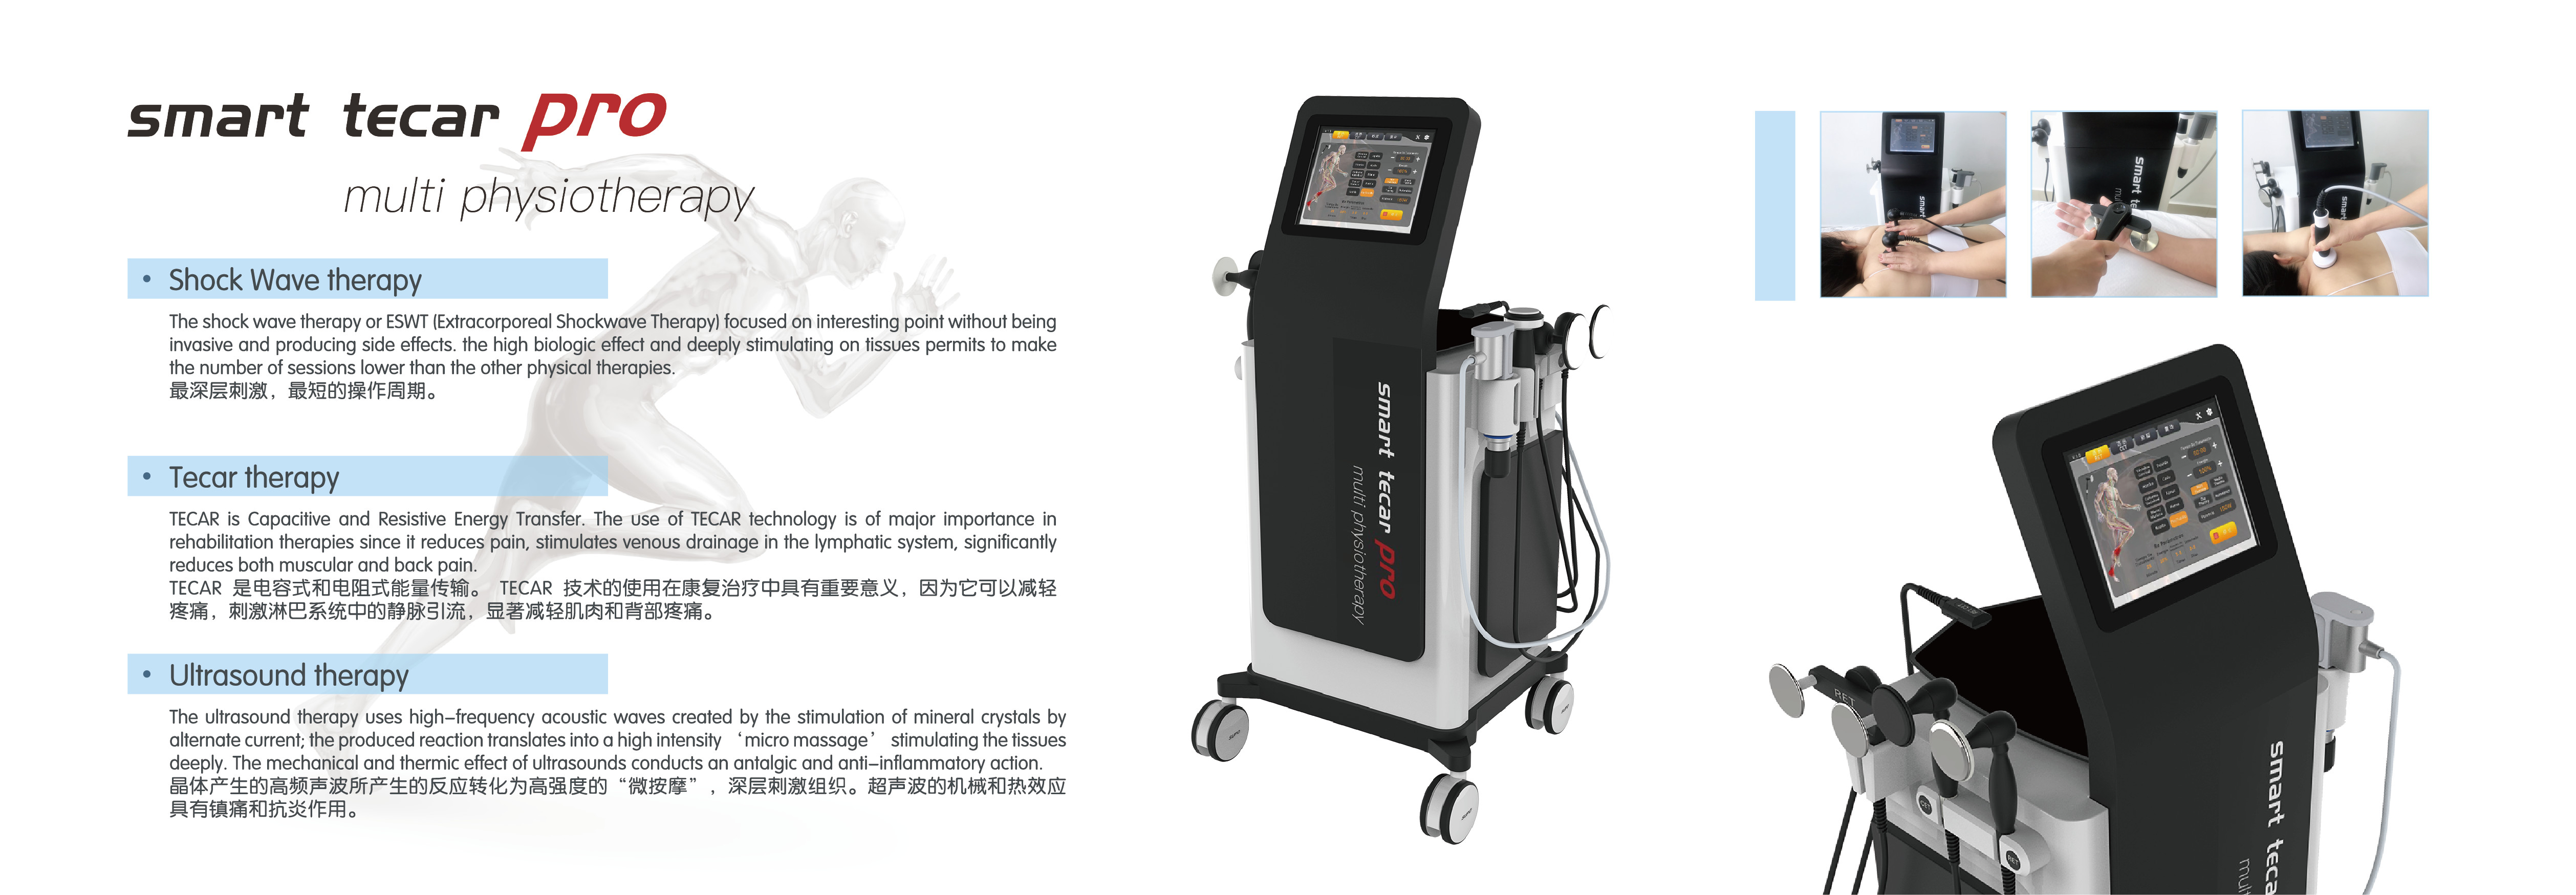 Tecar Therapy Microwave Diathermy Equipment لتدليك الجسم وتخفيف الآلام / العلاج بالموجات الصدمية